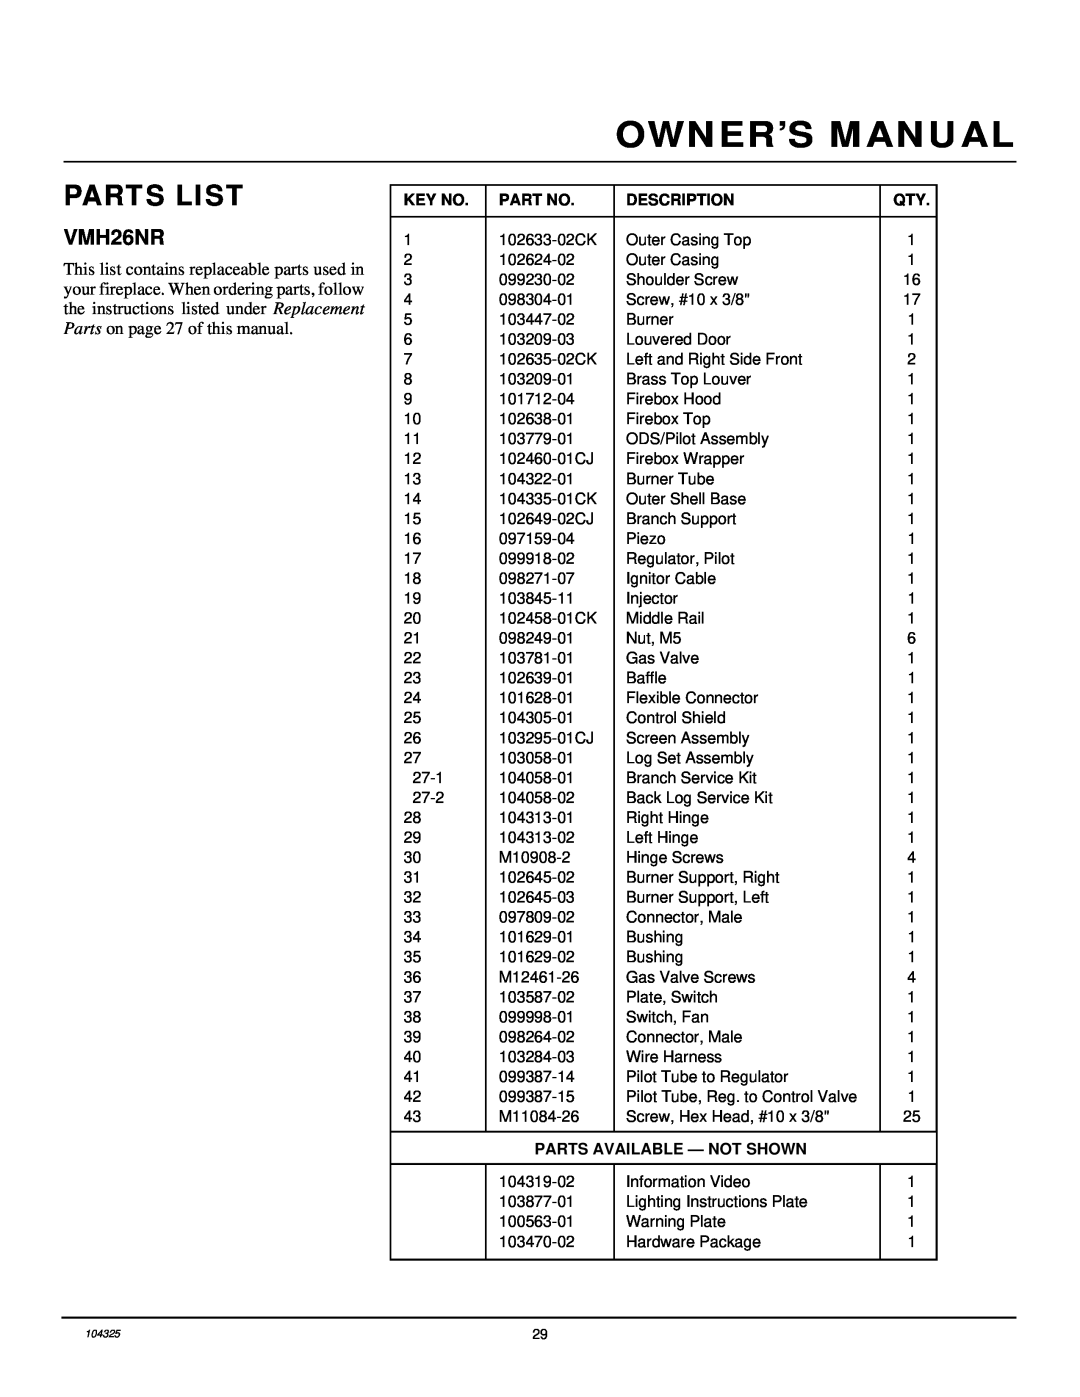 Vanguard Heating VMH26NR installation manual Parts List, Description, Parts Available - Not Shown 